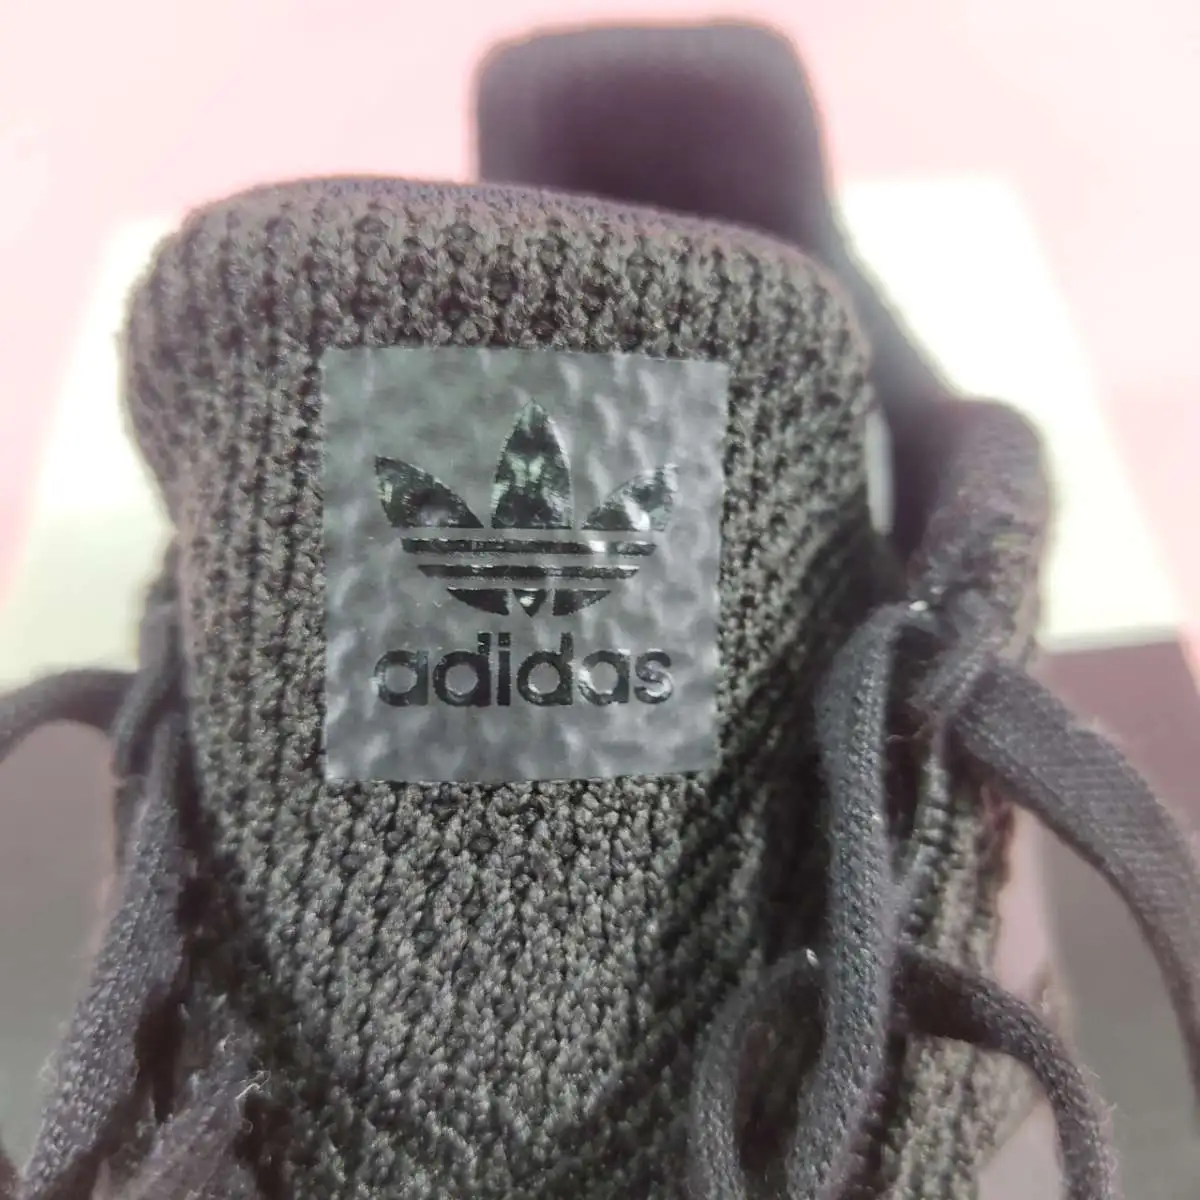 Adidas  รองเท้าผ้าใบสีดำ size 12K / 17.8 cm